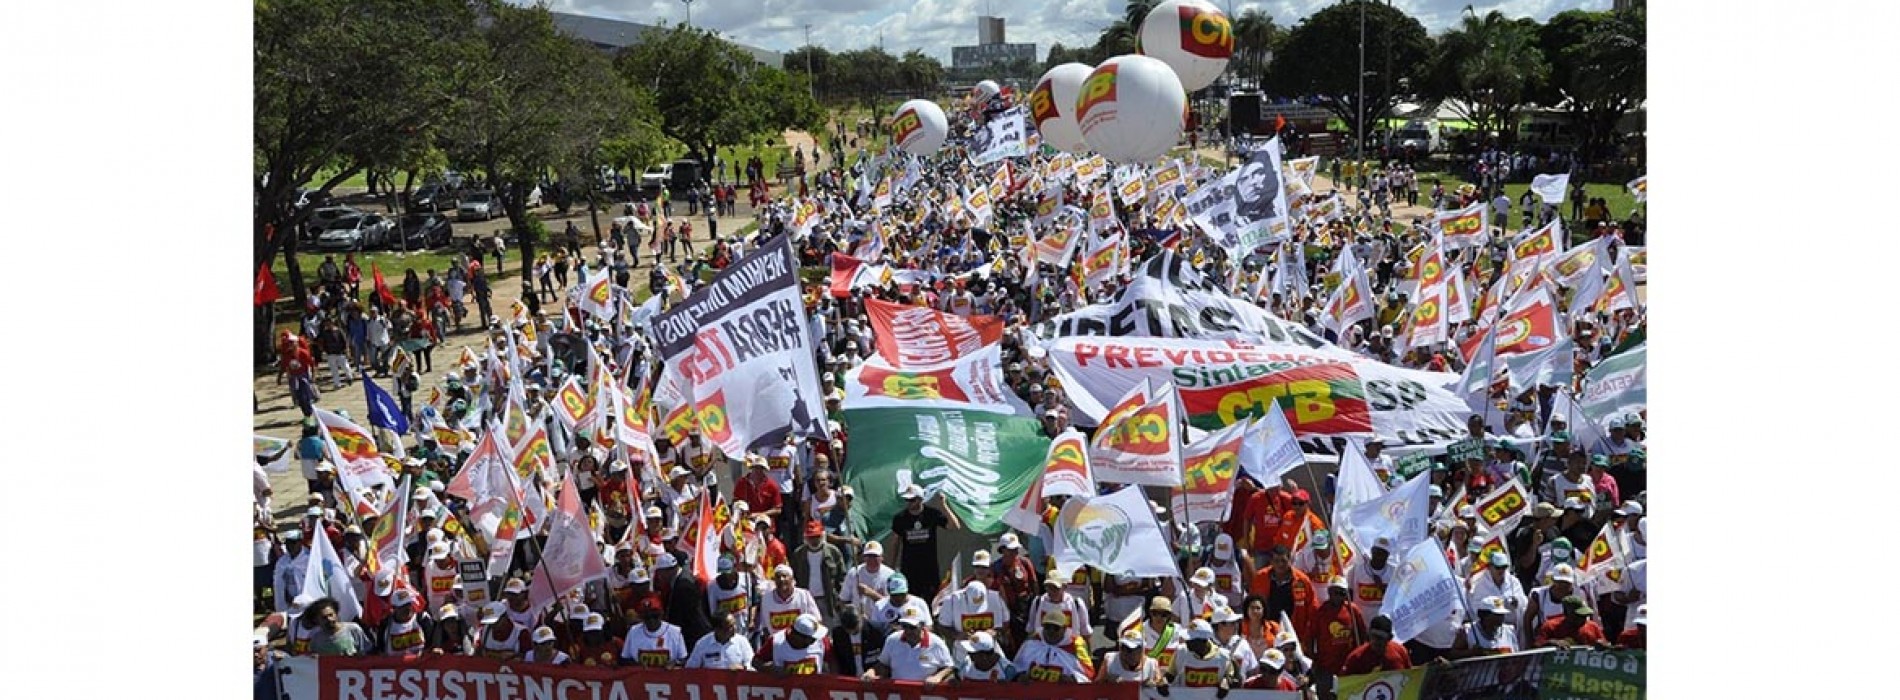 Brasília ocupada contra as reformas